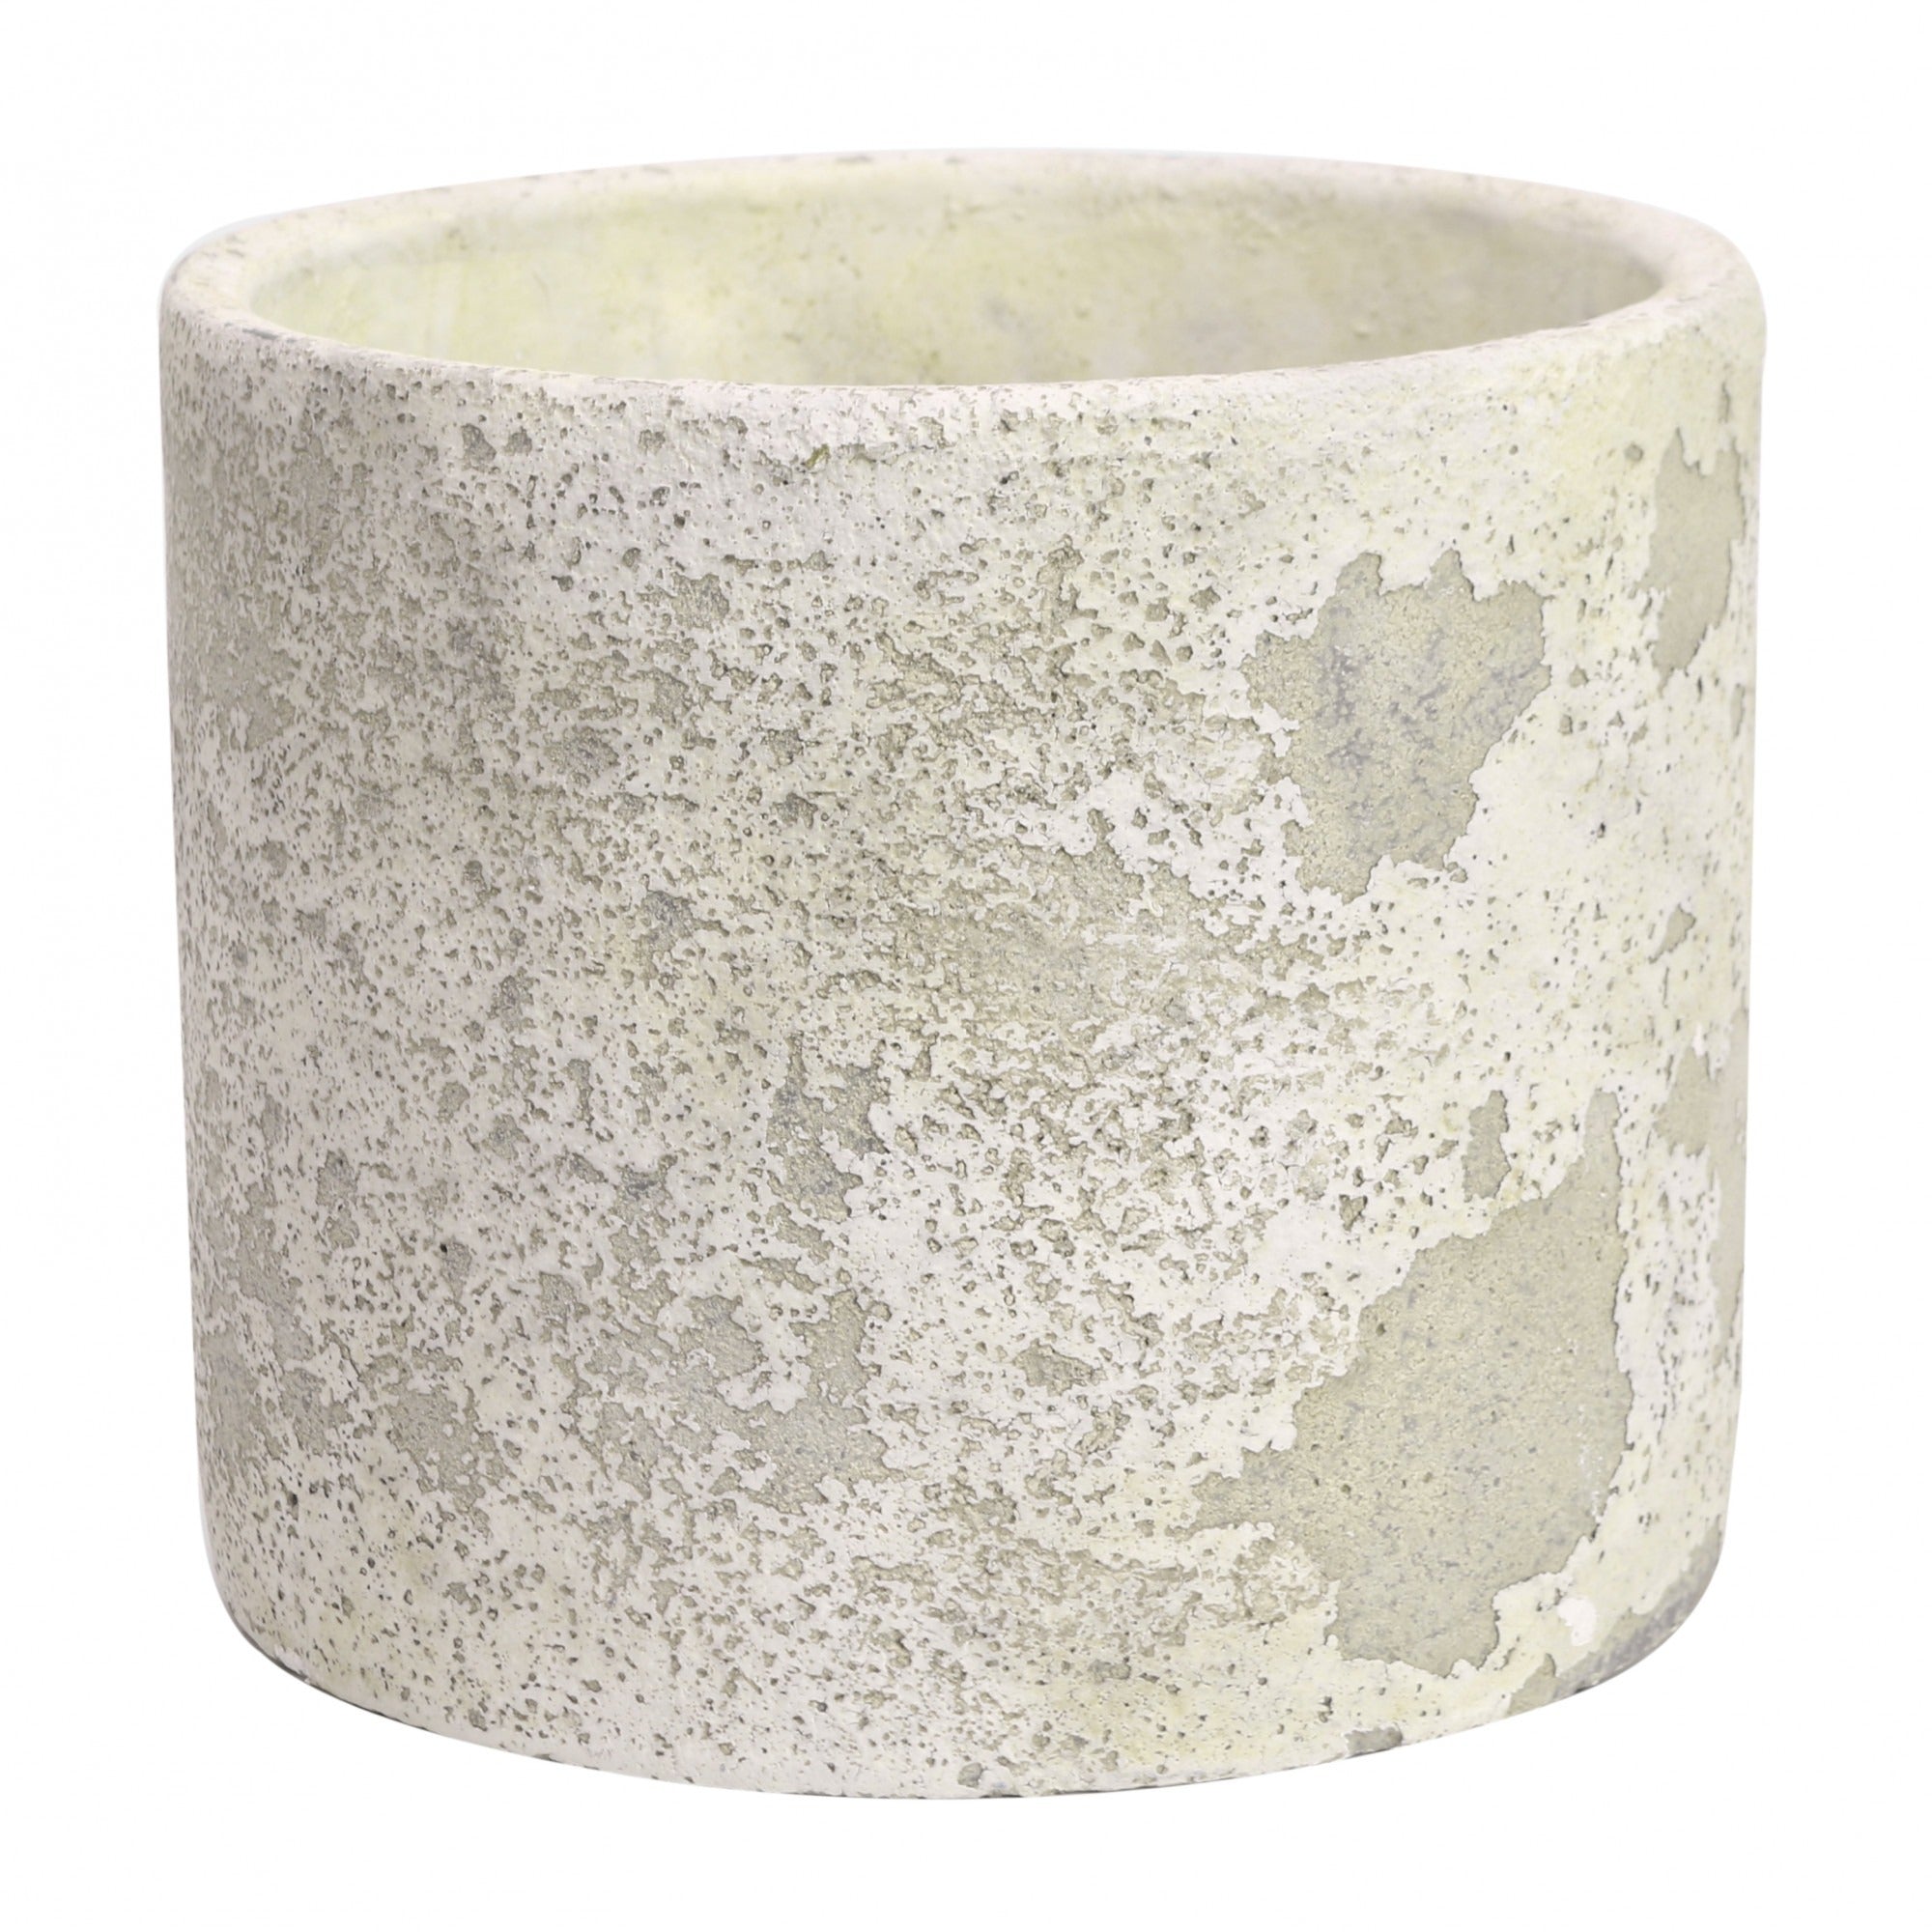 View Rustic Round Cement Flower Pot 15cm information